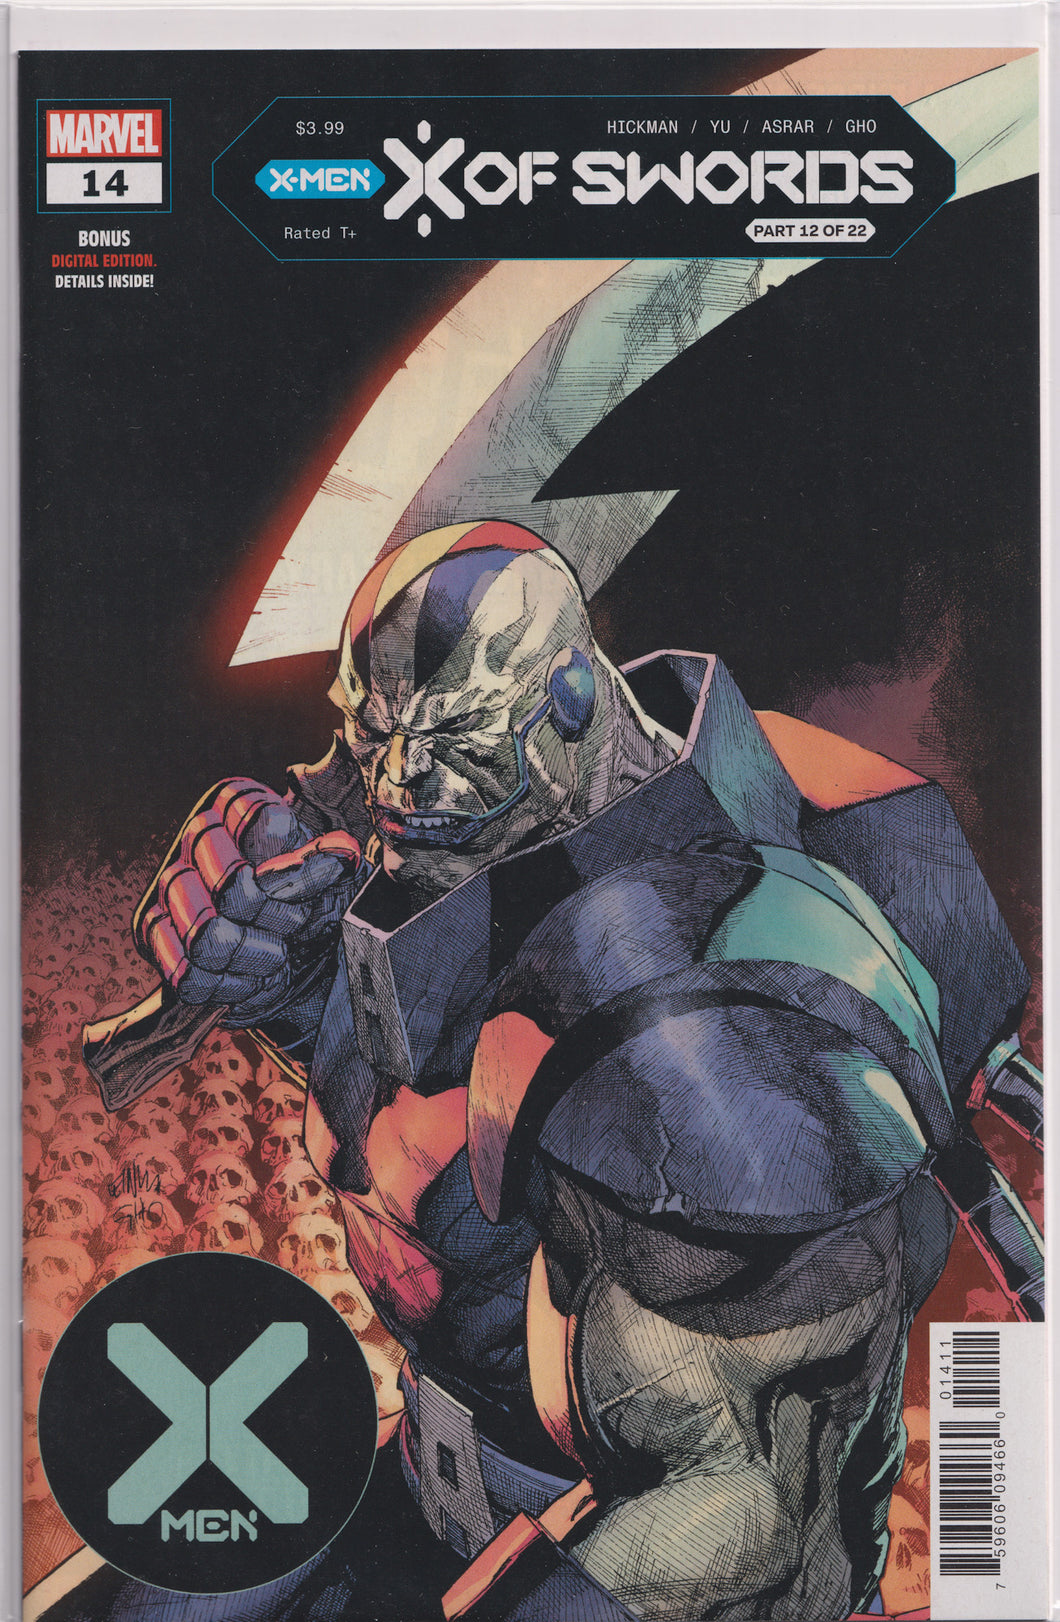 X-MEN #14 (YU VARIANT)(X OF SWORDS CROSSOVER) COMIC BOOK ~ Marvel Comics